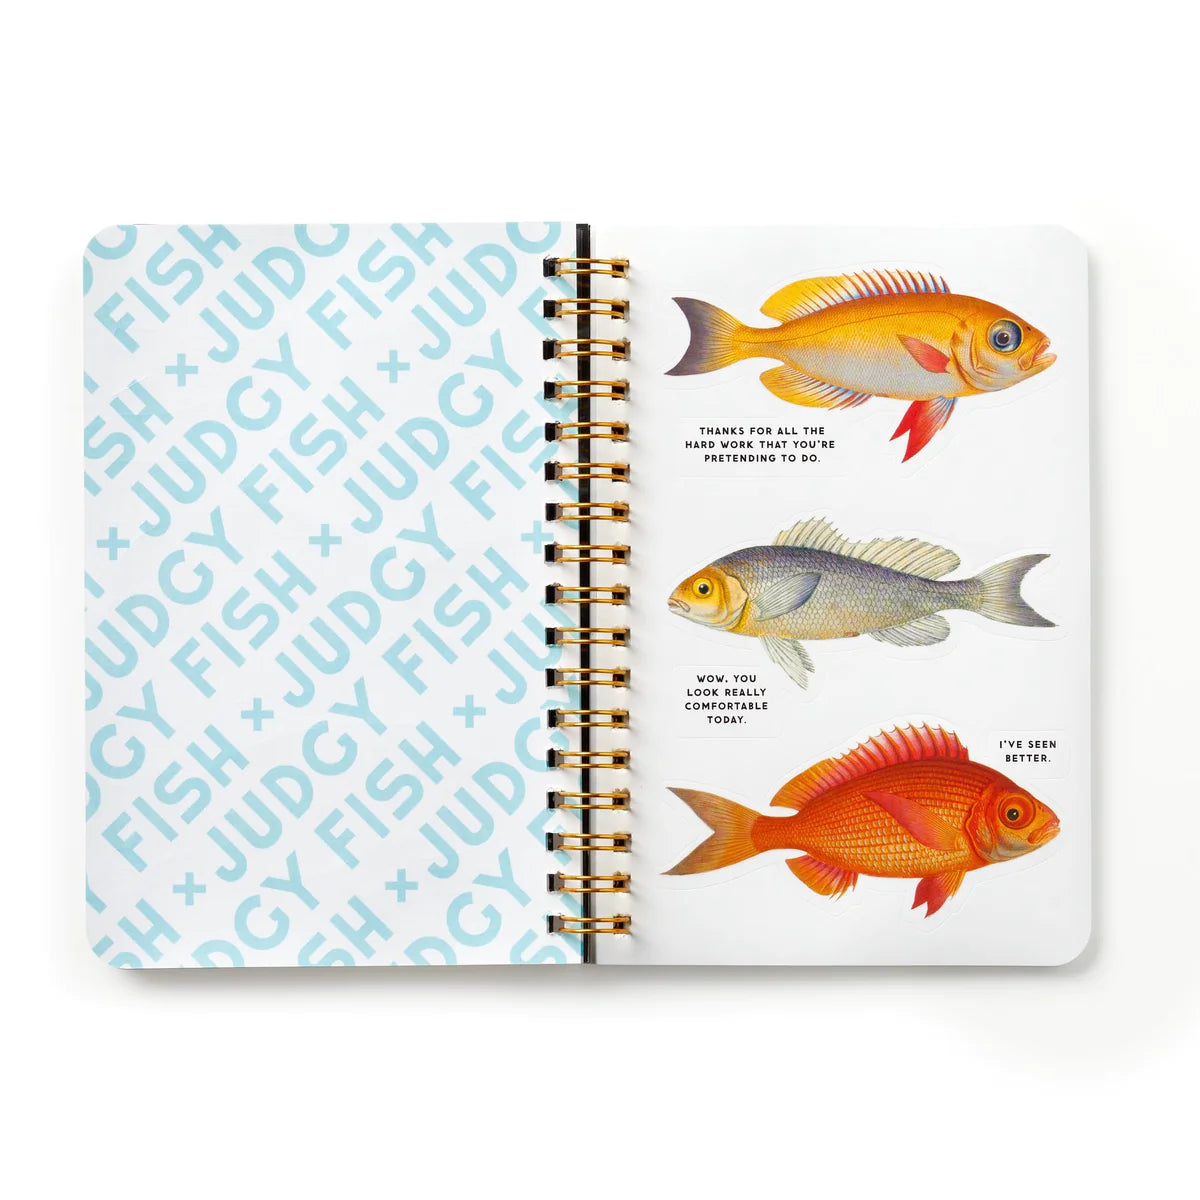 Judge Fish Sticker Book